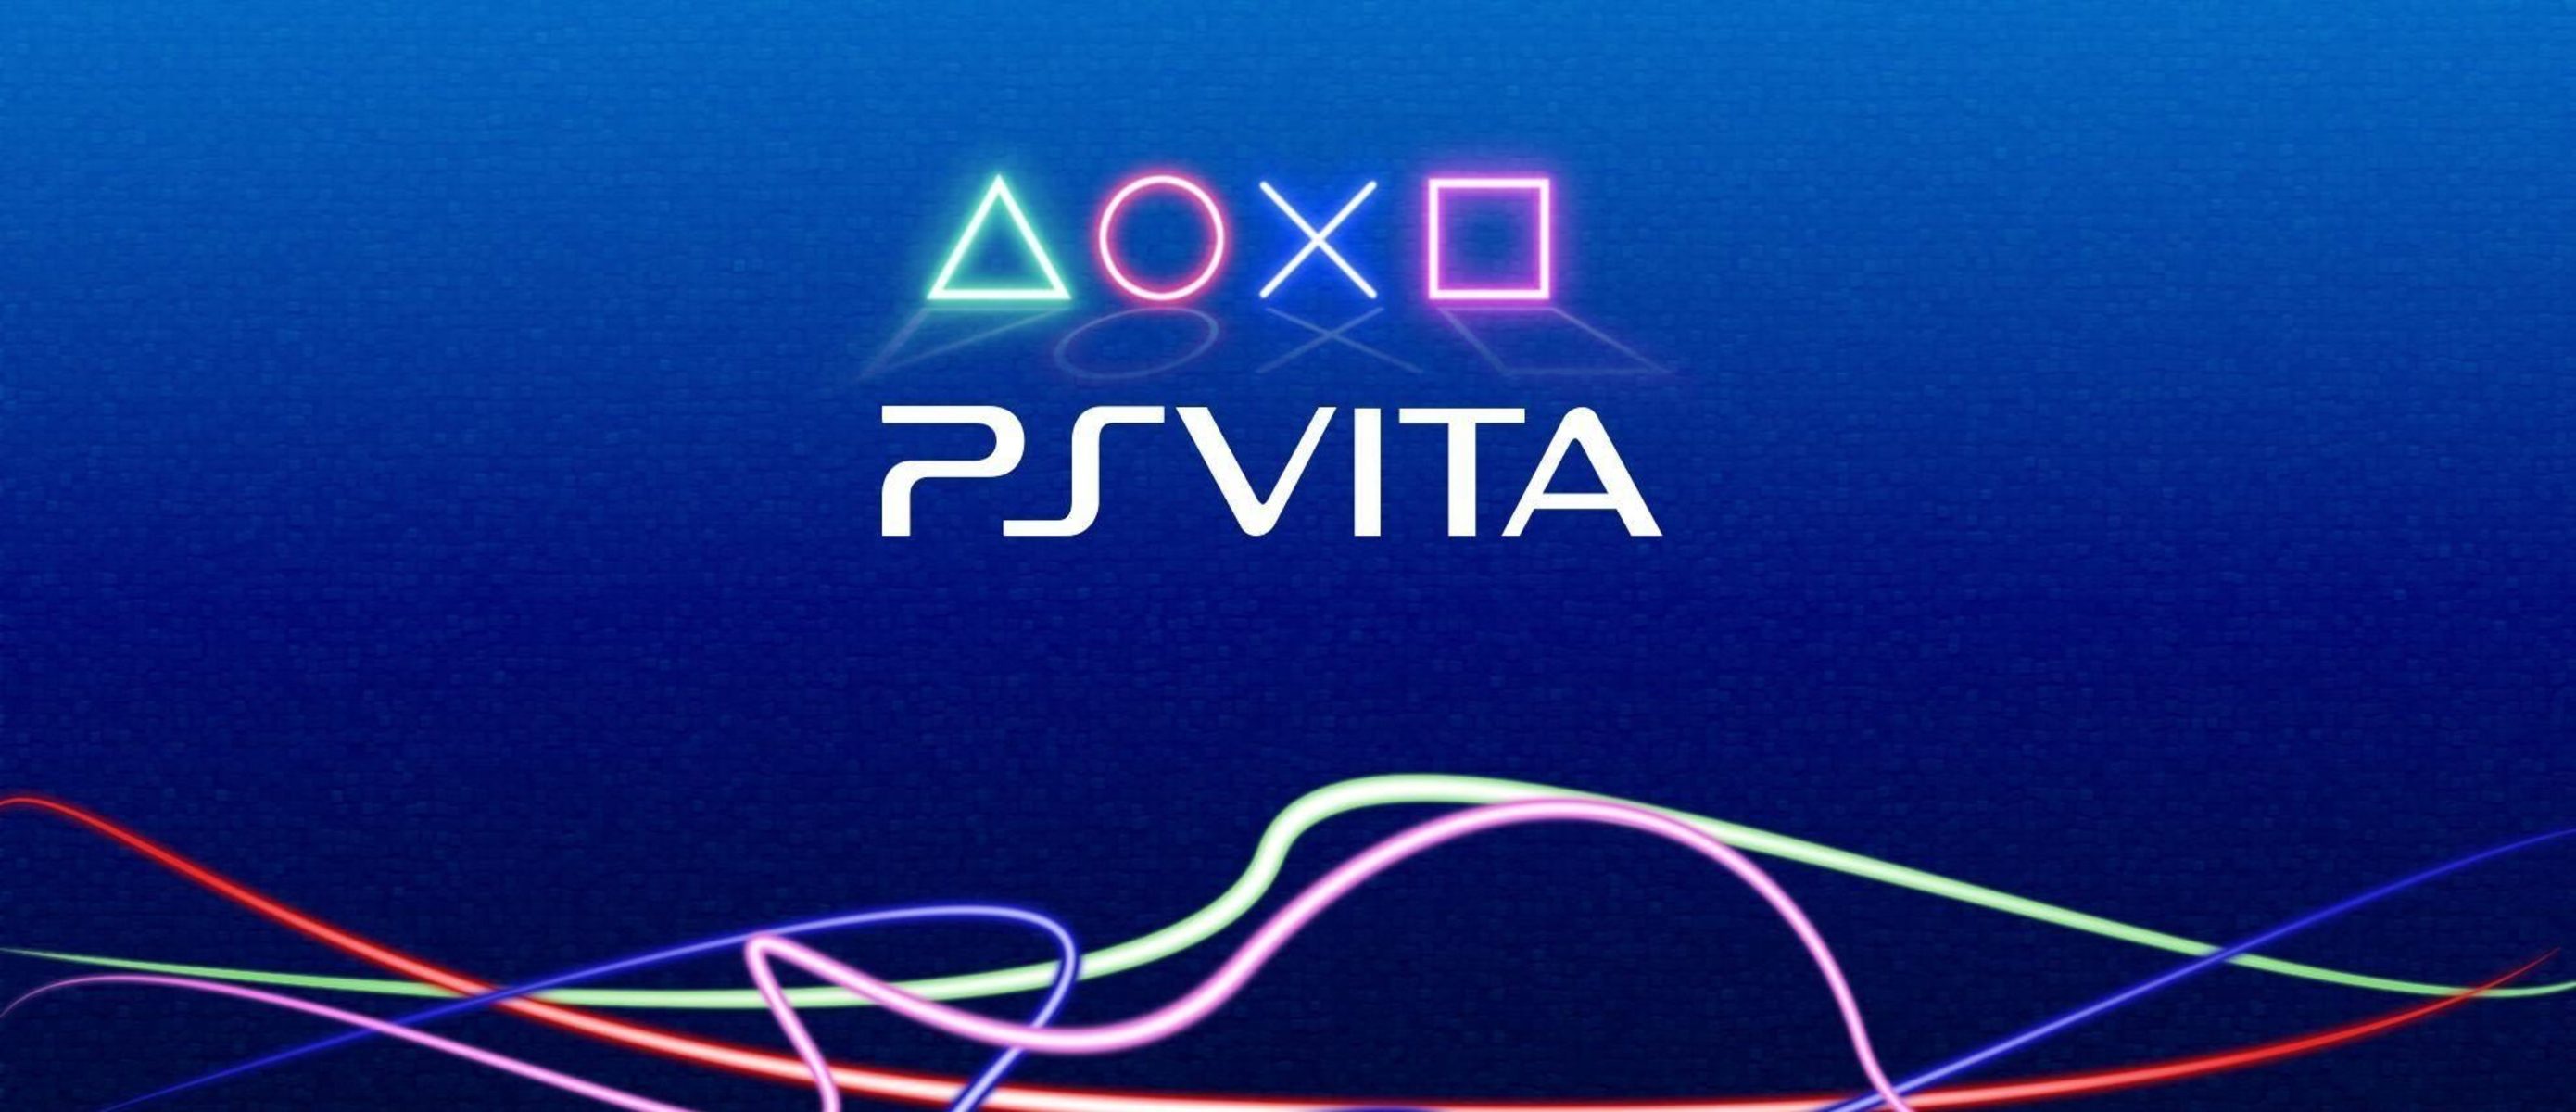 Заставка playstation. PLAYSTATION обои. Обои для PS Vita. Логотип PS Vita. Sony PLAYSTATION обои на рабочий стол.